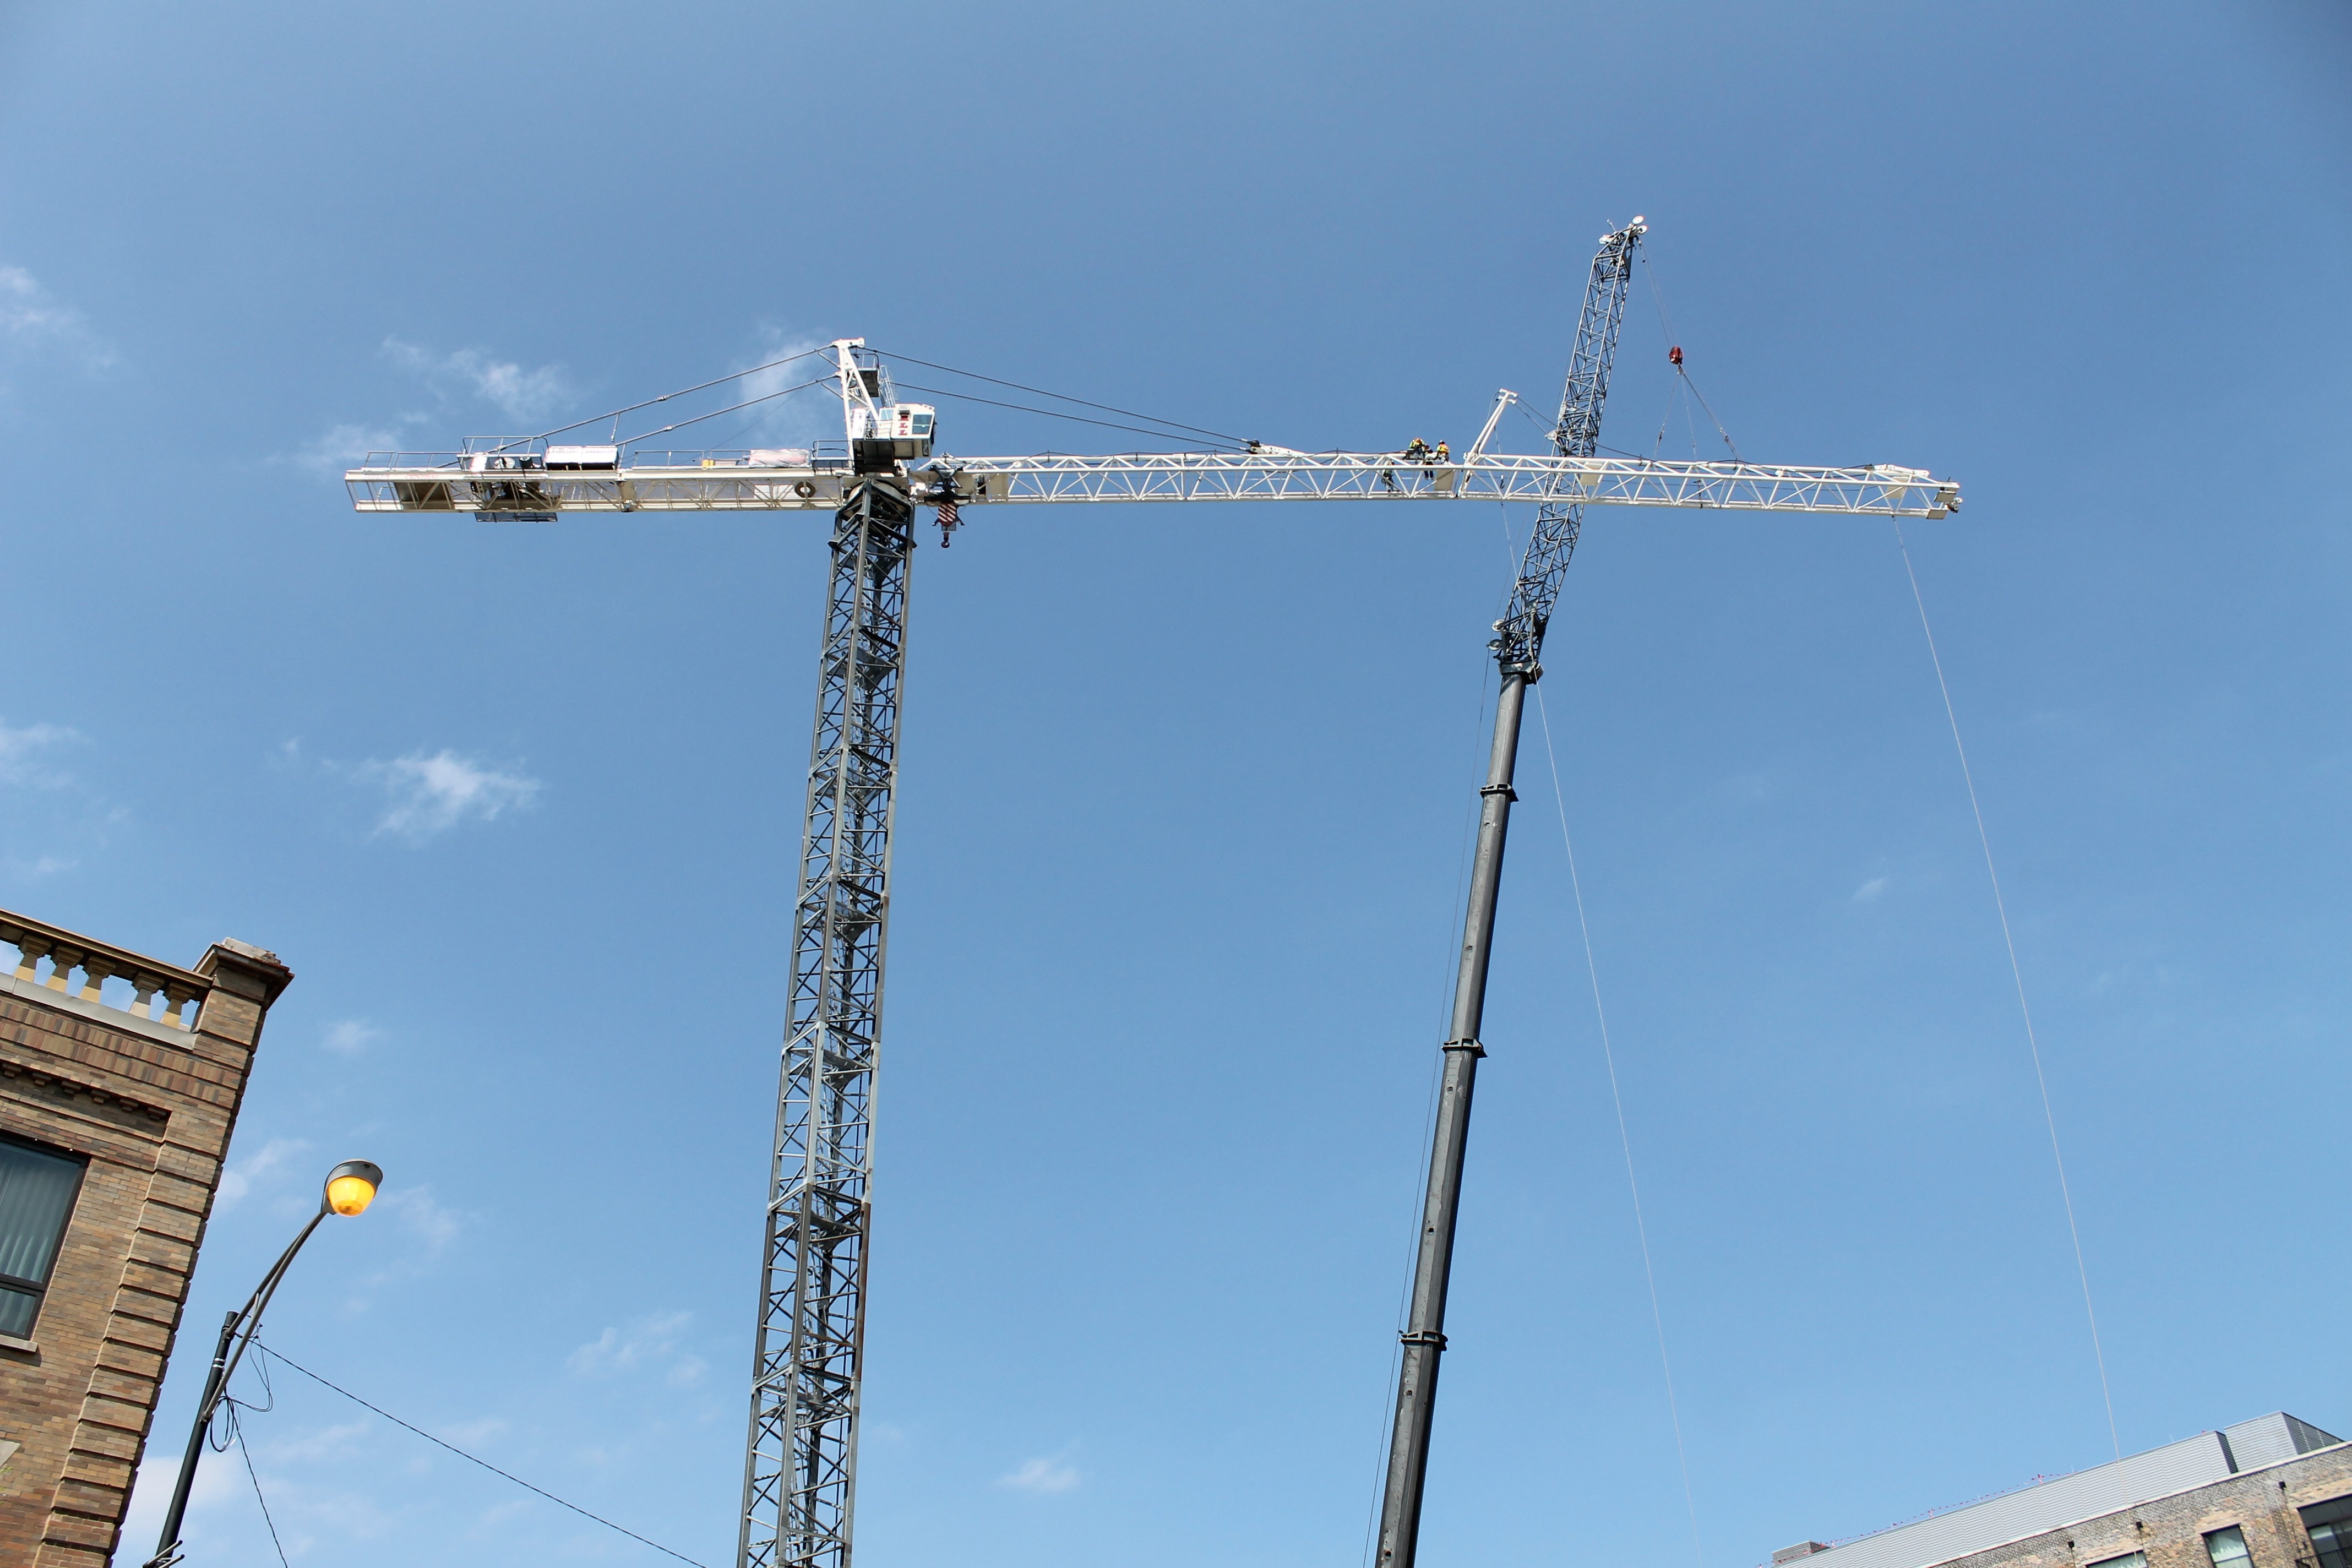 Hyatt House West Loop tower crane assembly